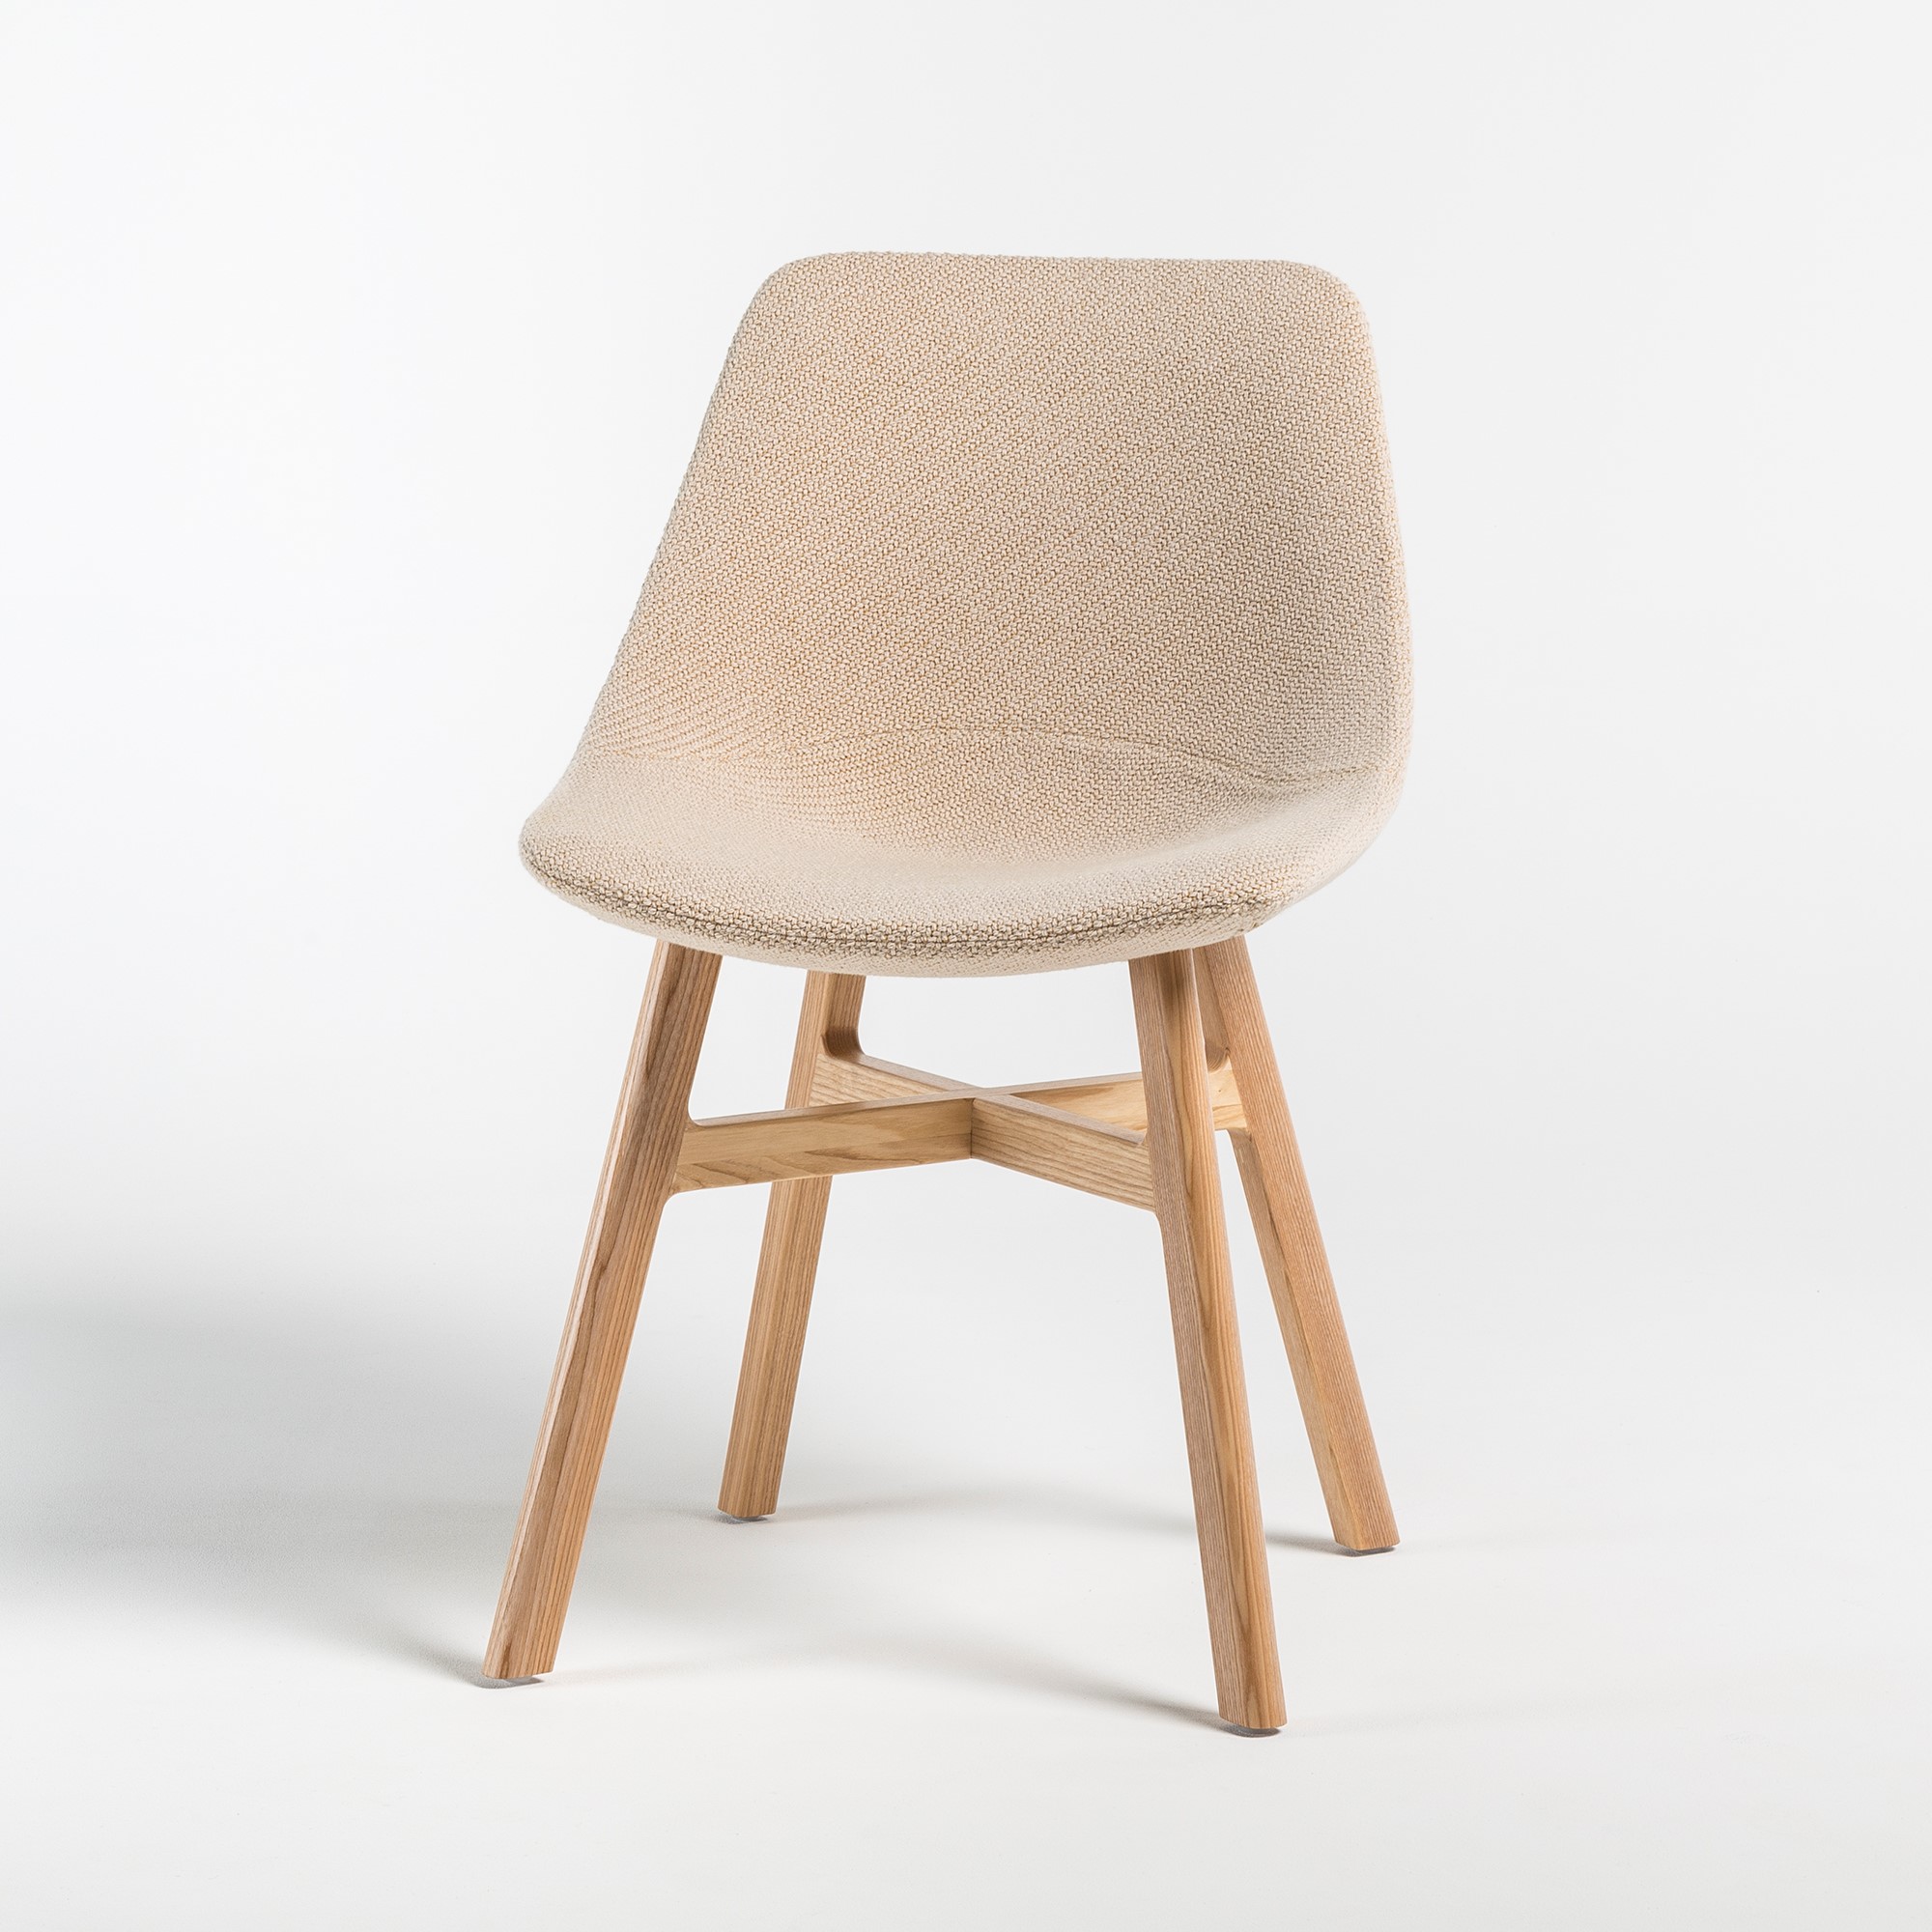 MISHELL_packshot_chair_wooden legs